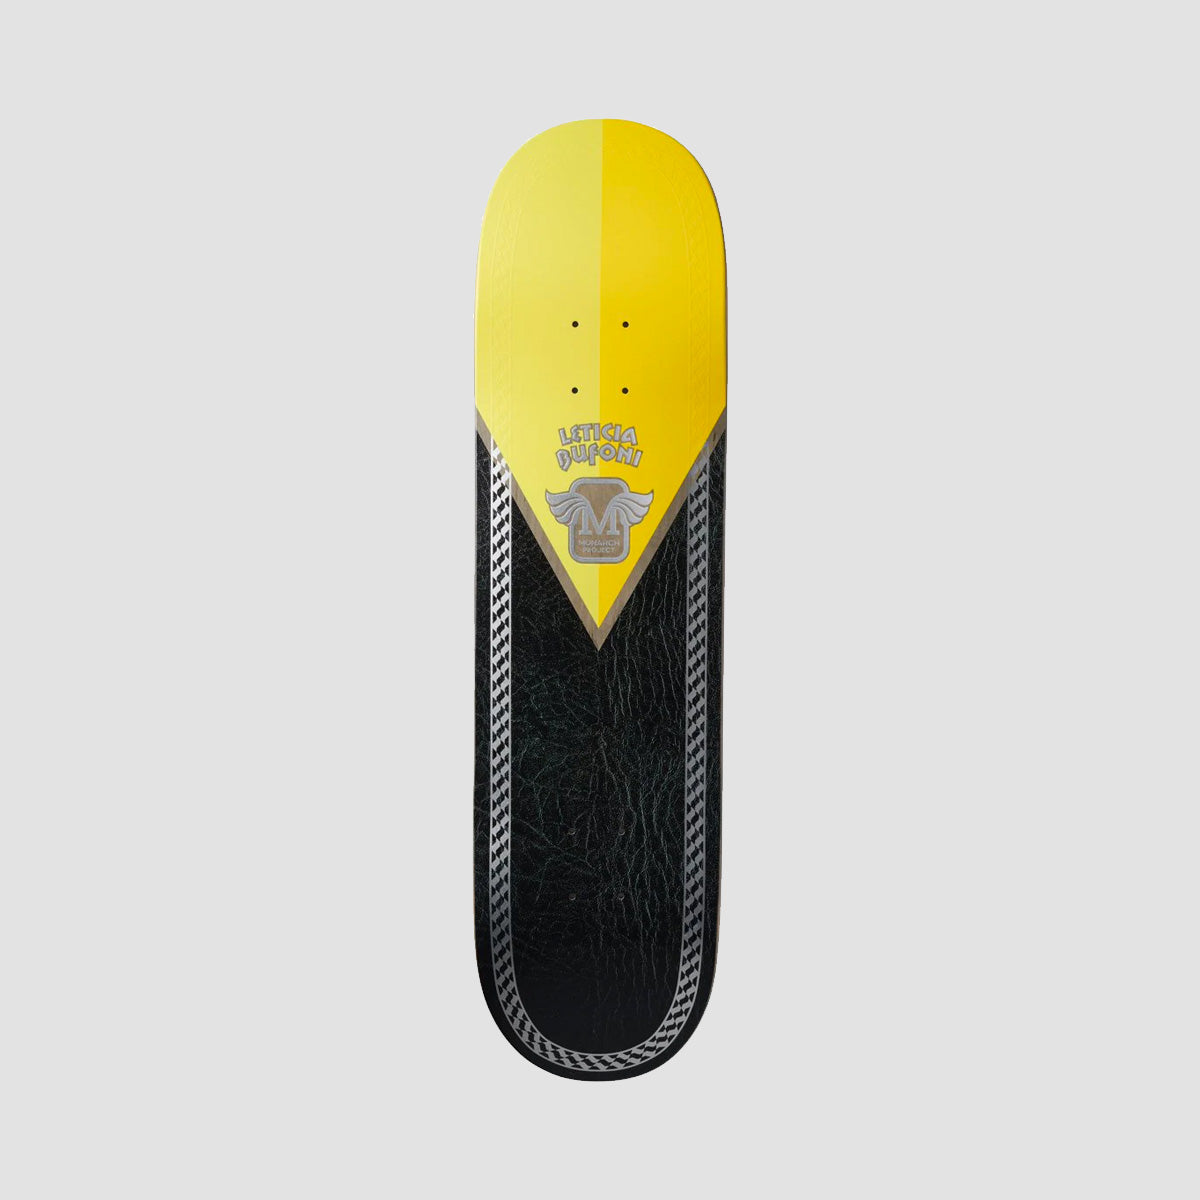 Monarch Project Atelier R7 Skateboard Deck Leticia Bufoni/Yellow - 8.25"